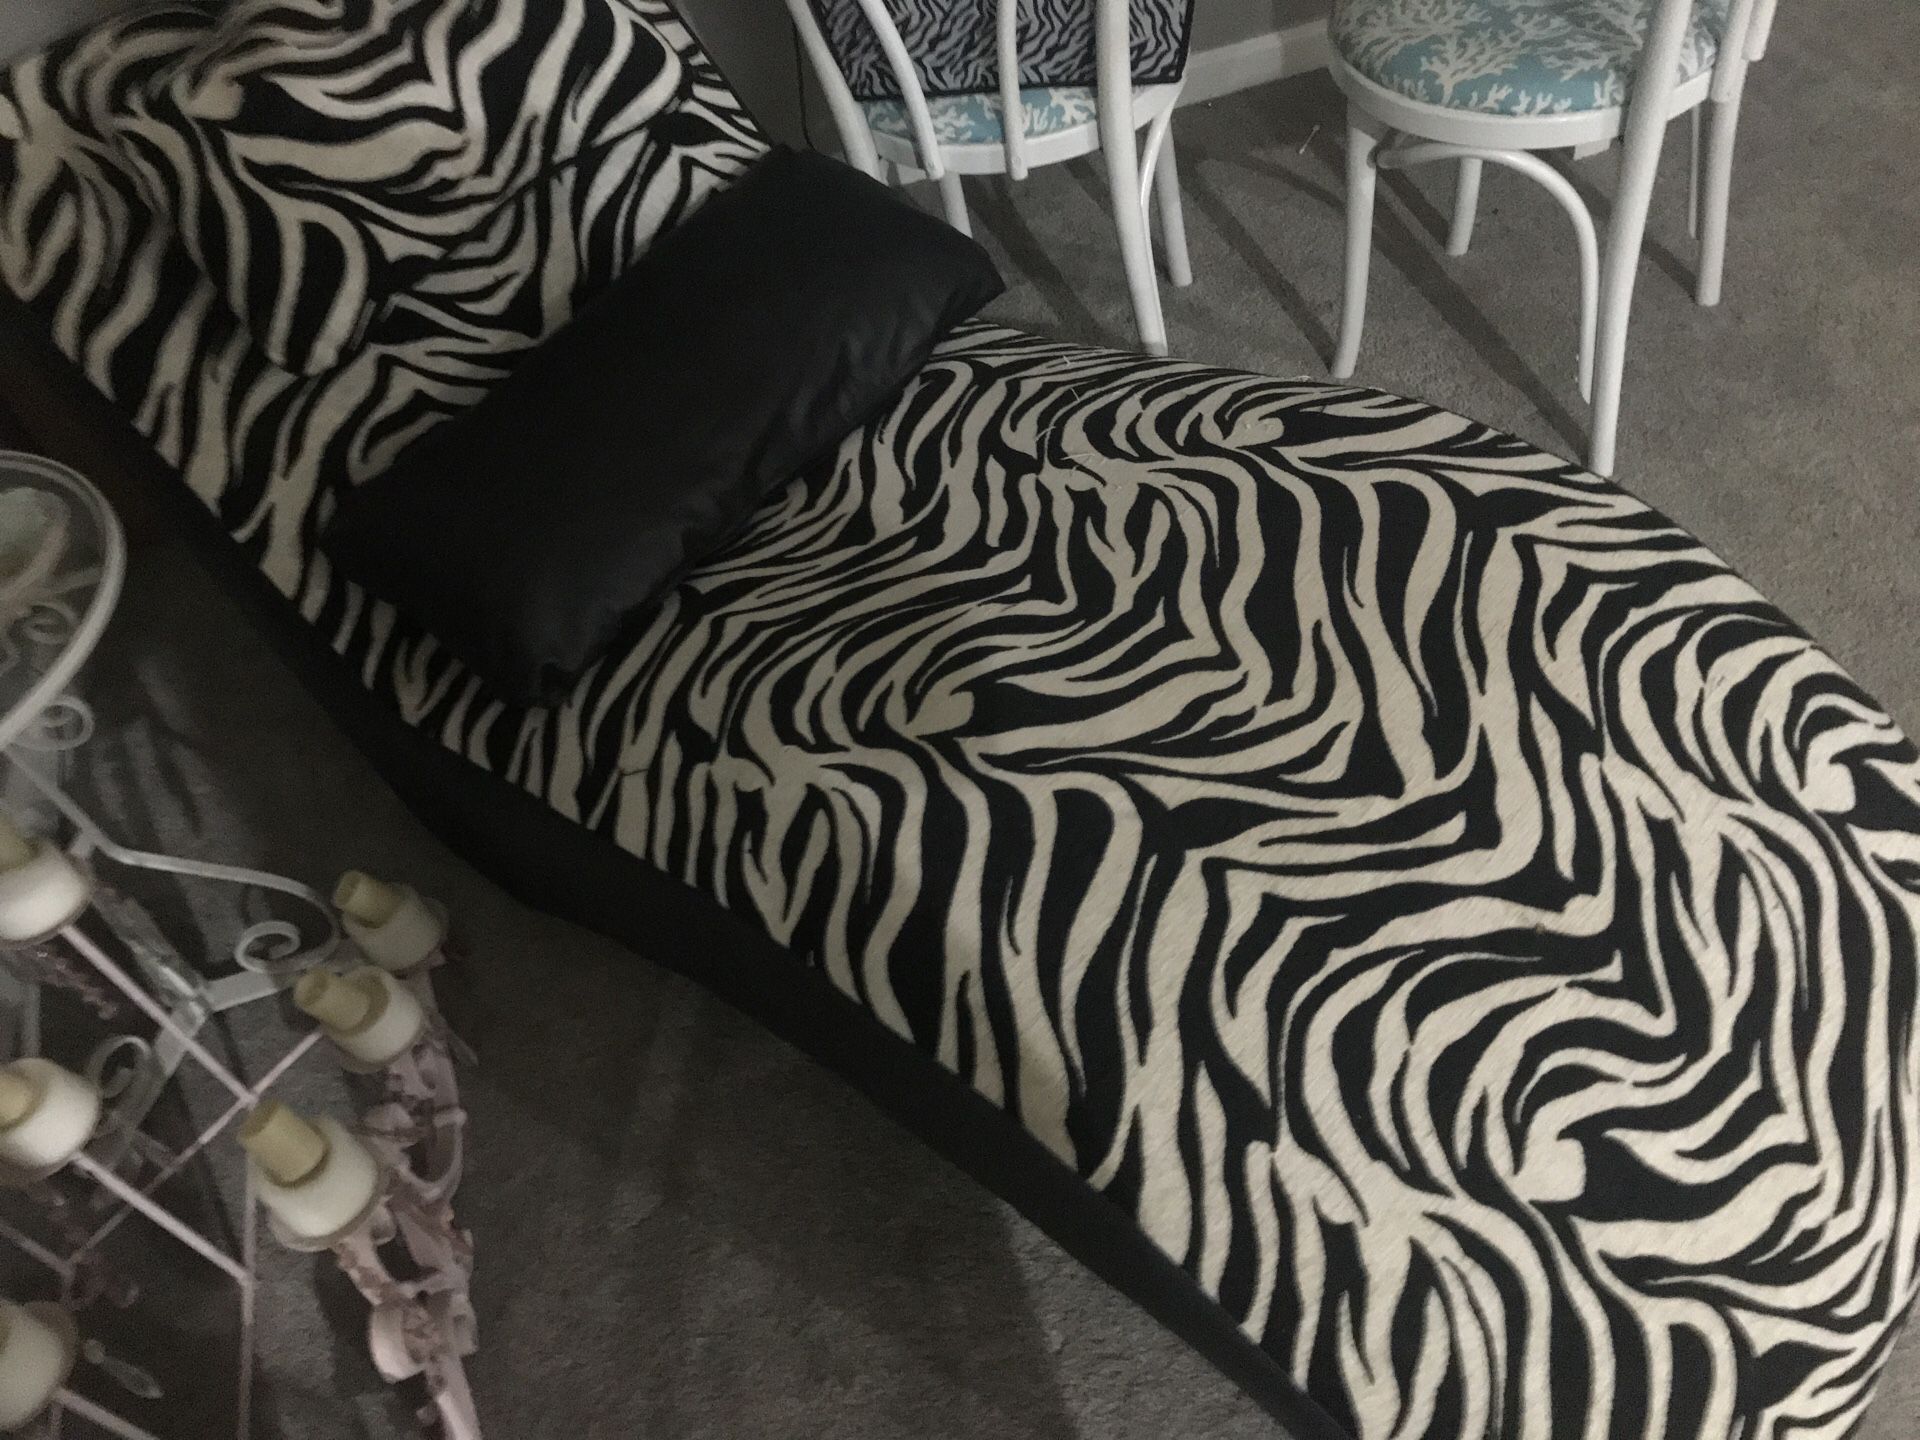 Zebra lounge chair